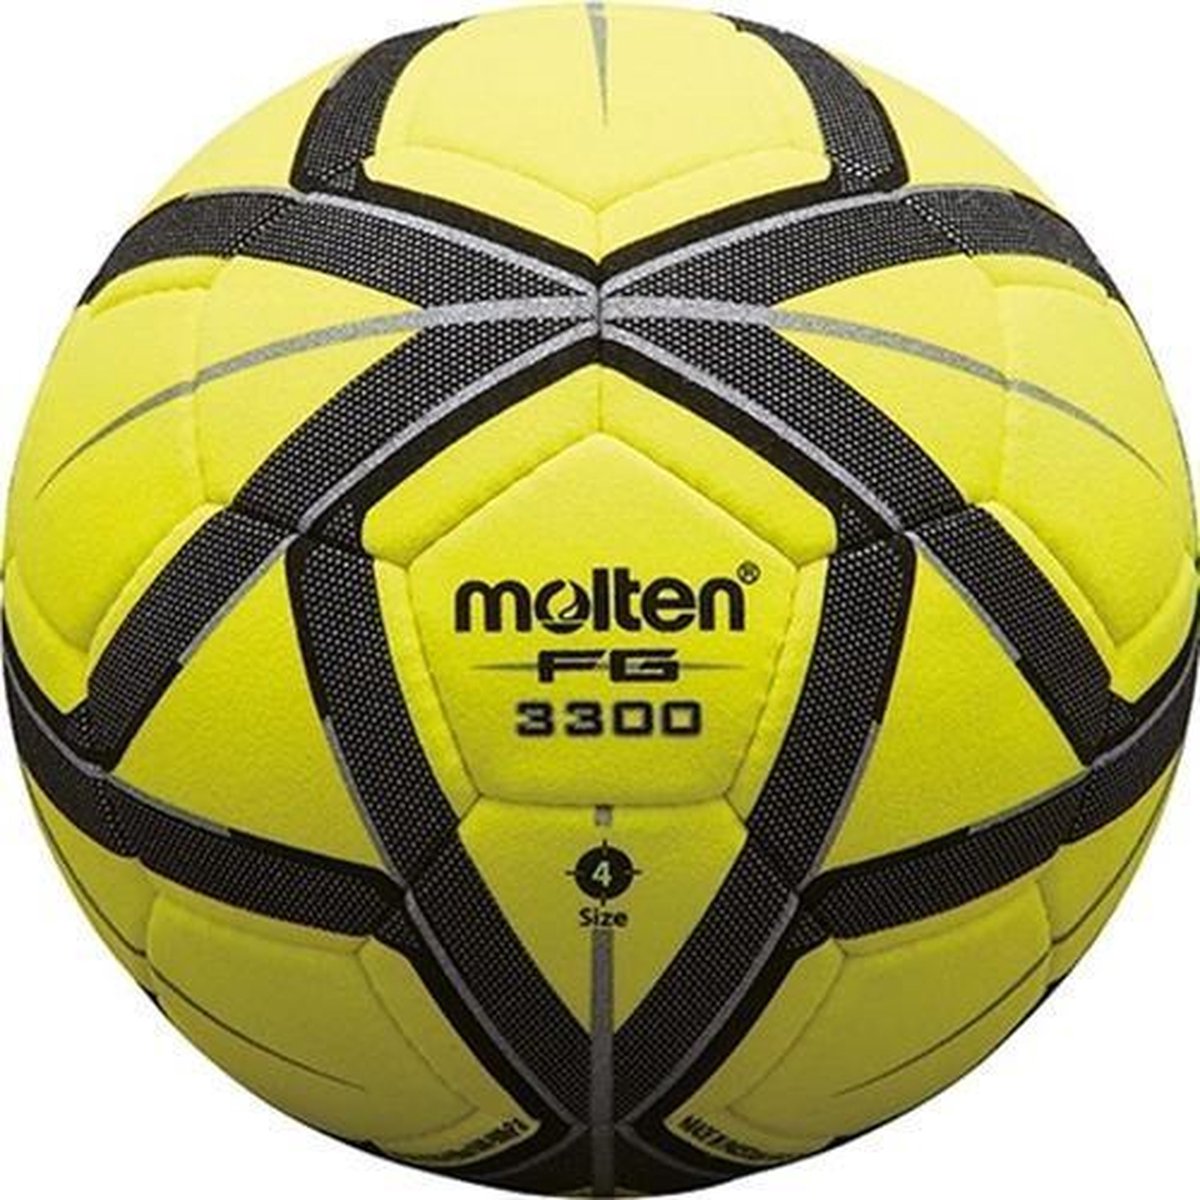 Molten Zaalvoetbal F4G3300 Geel/zwart Maat 4